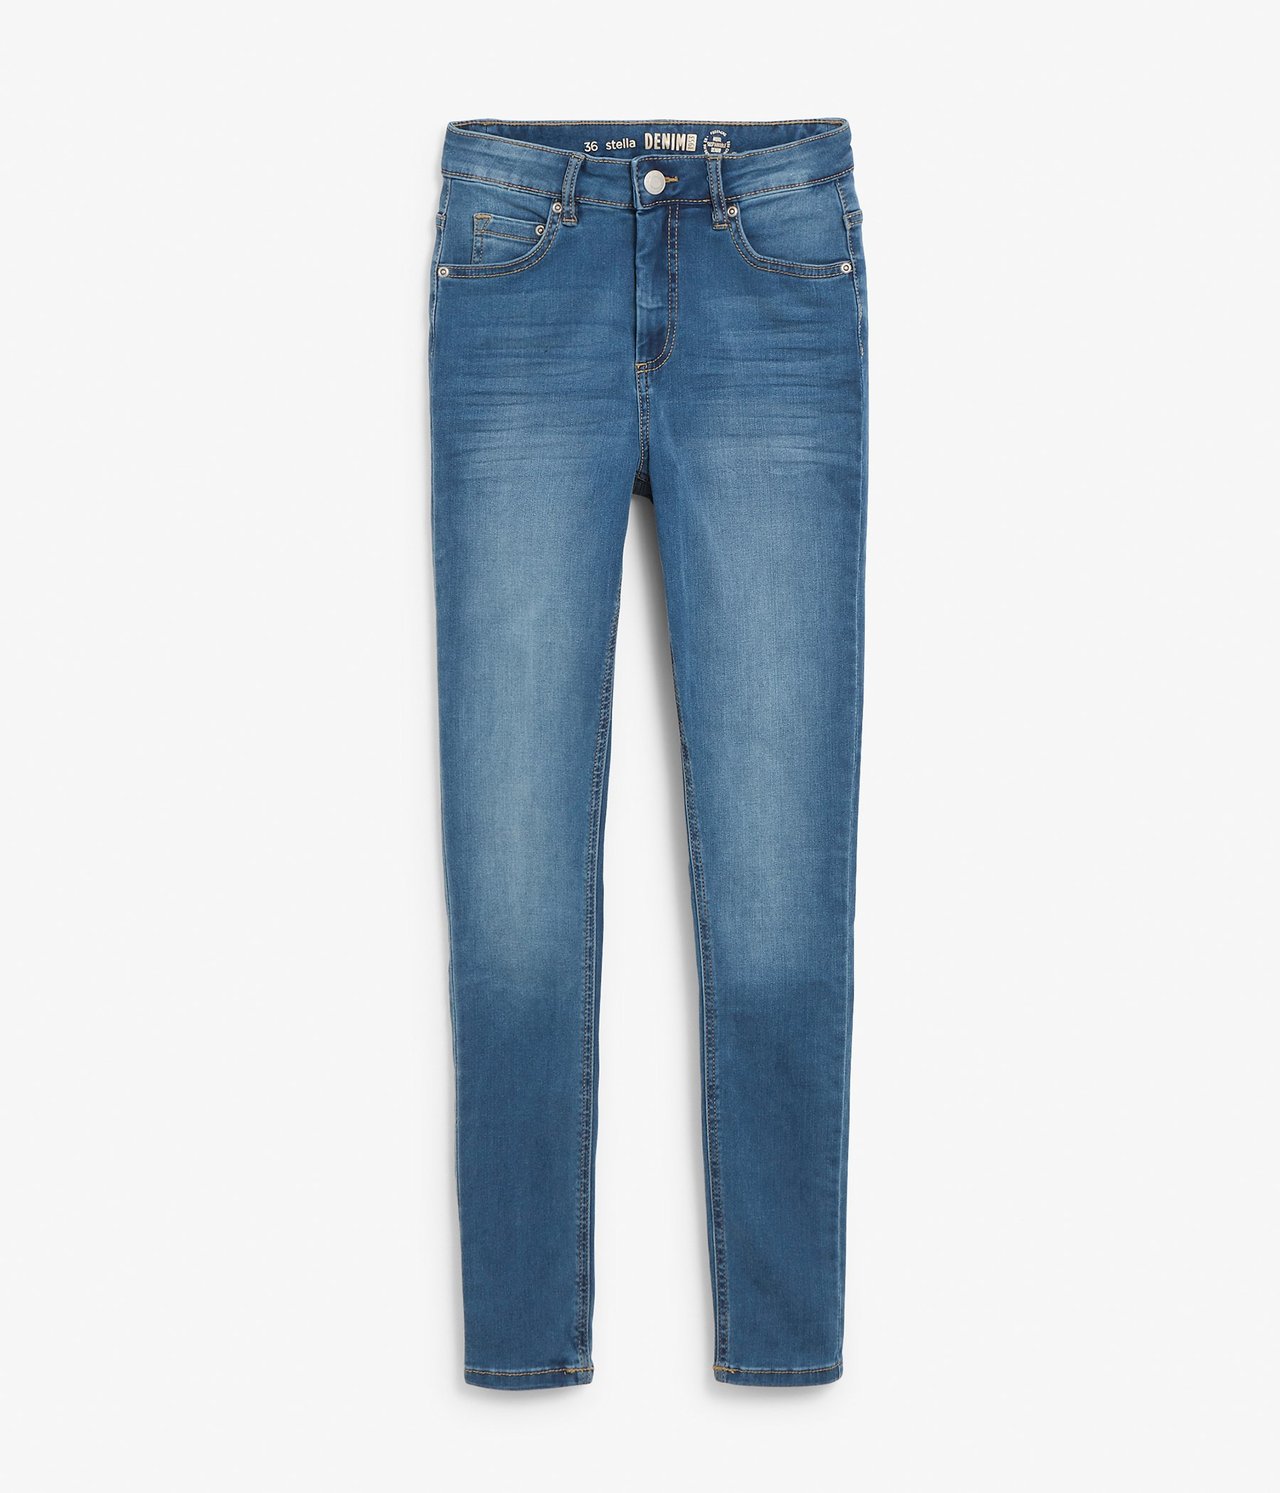 Super slim jeans extra long leg - Denim - 5